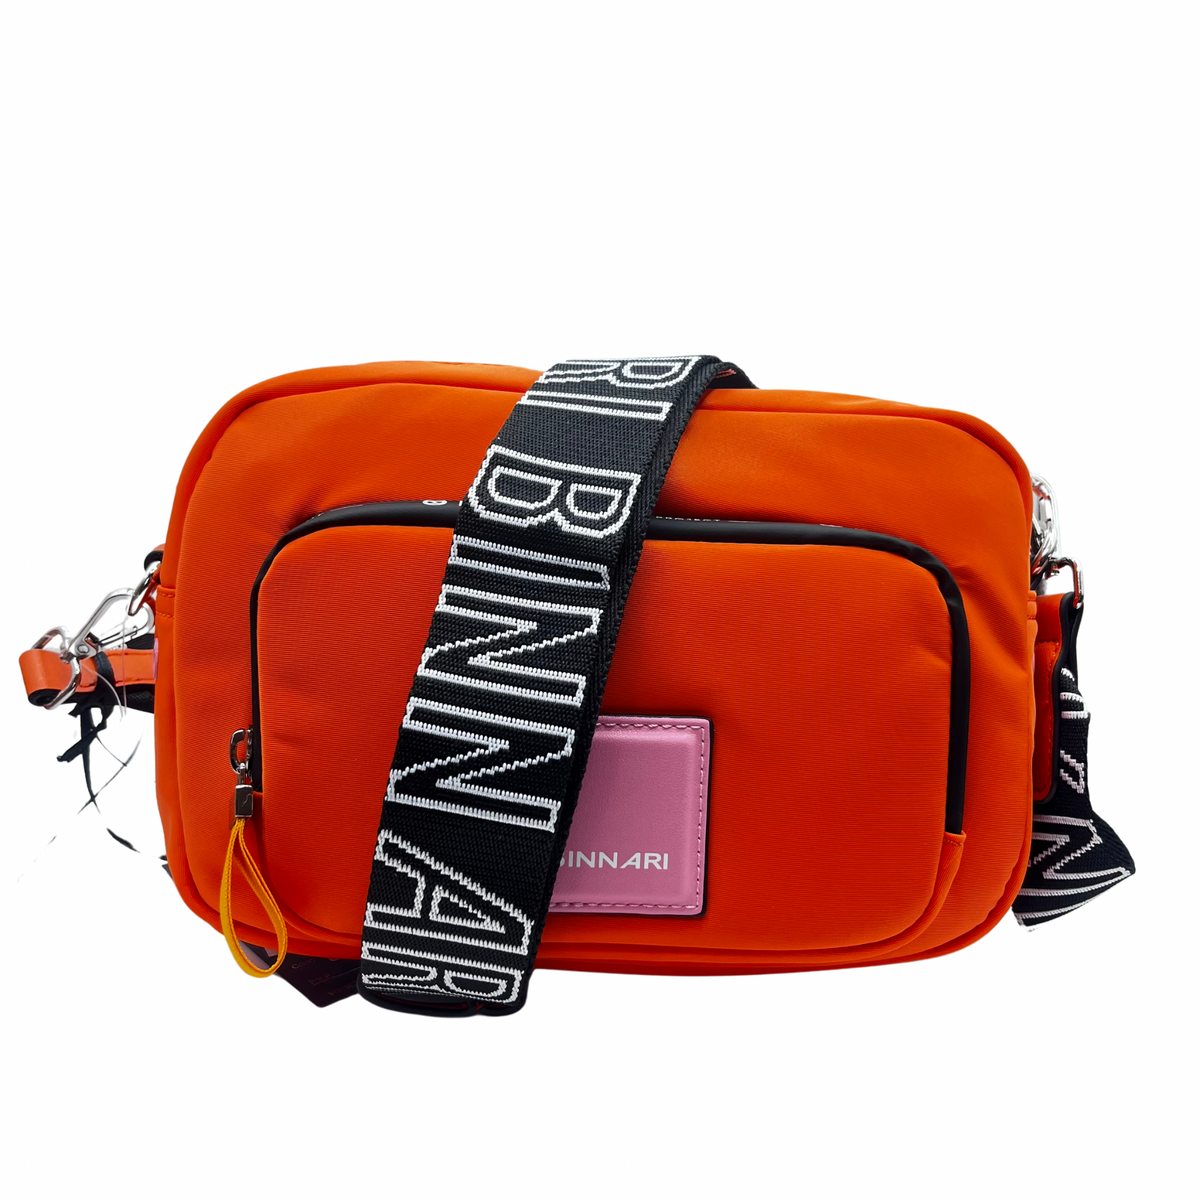 Binnari Orange Crossbody Bag